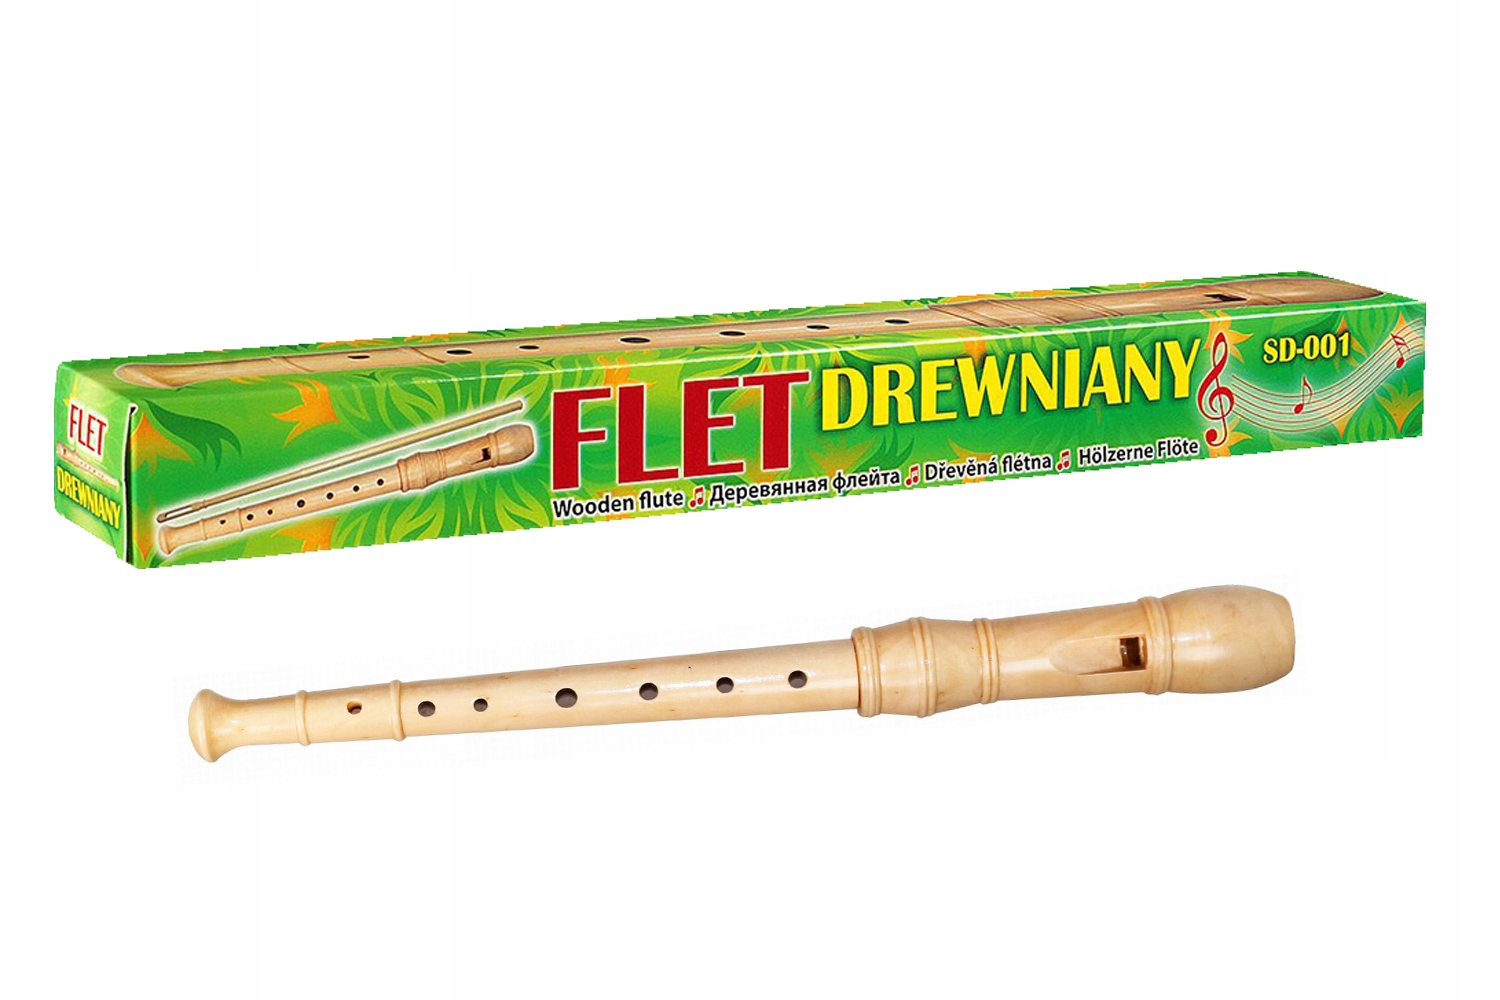 Просто флейта. Флейта деревянная. Флейта простая. Деревянная флейта купить. Матцаханга деревянная флейта.